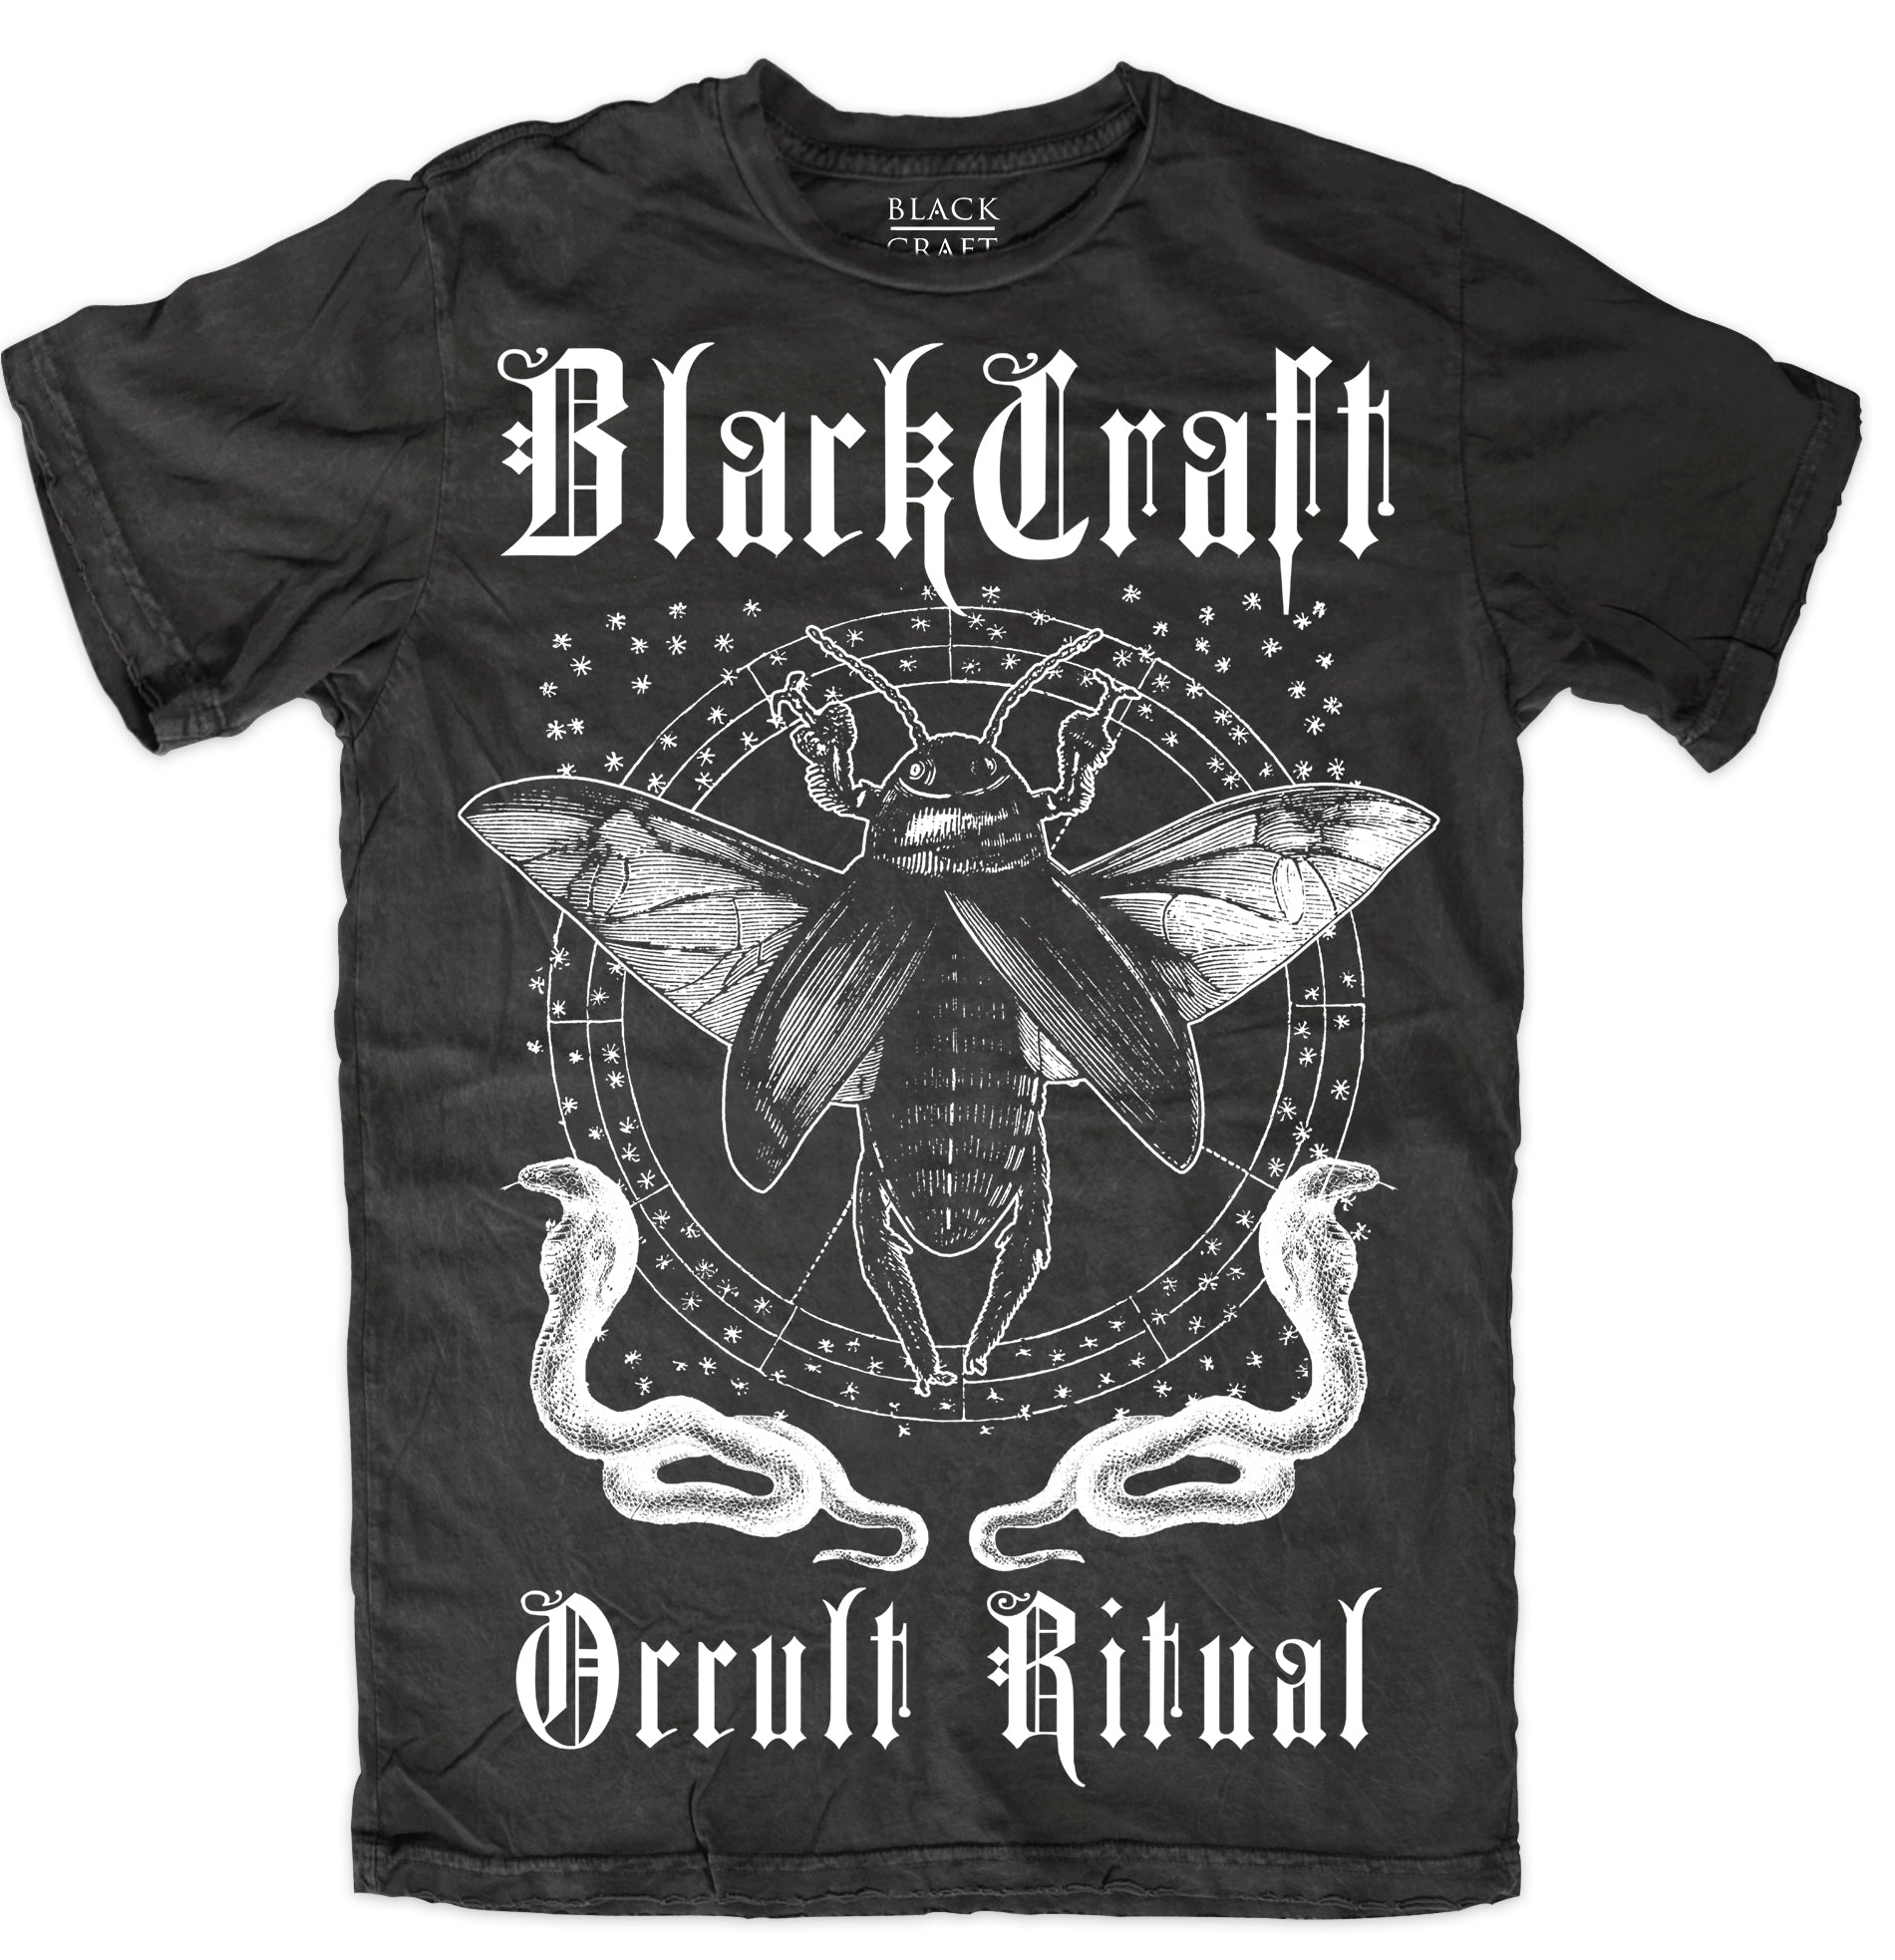 Occult Ritual Blackcraft Cult